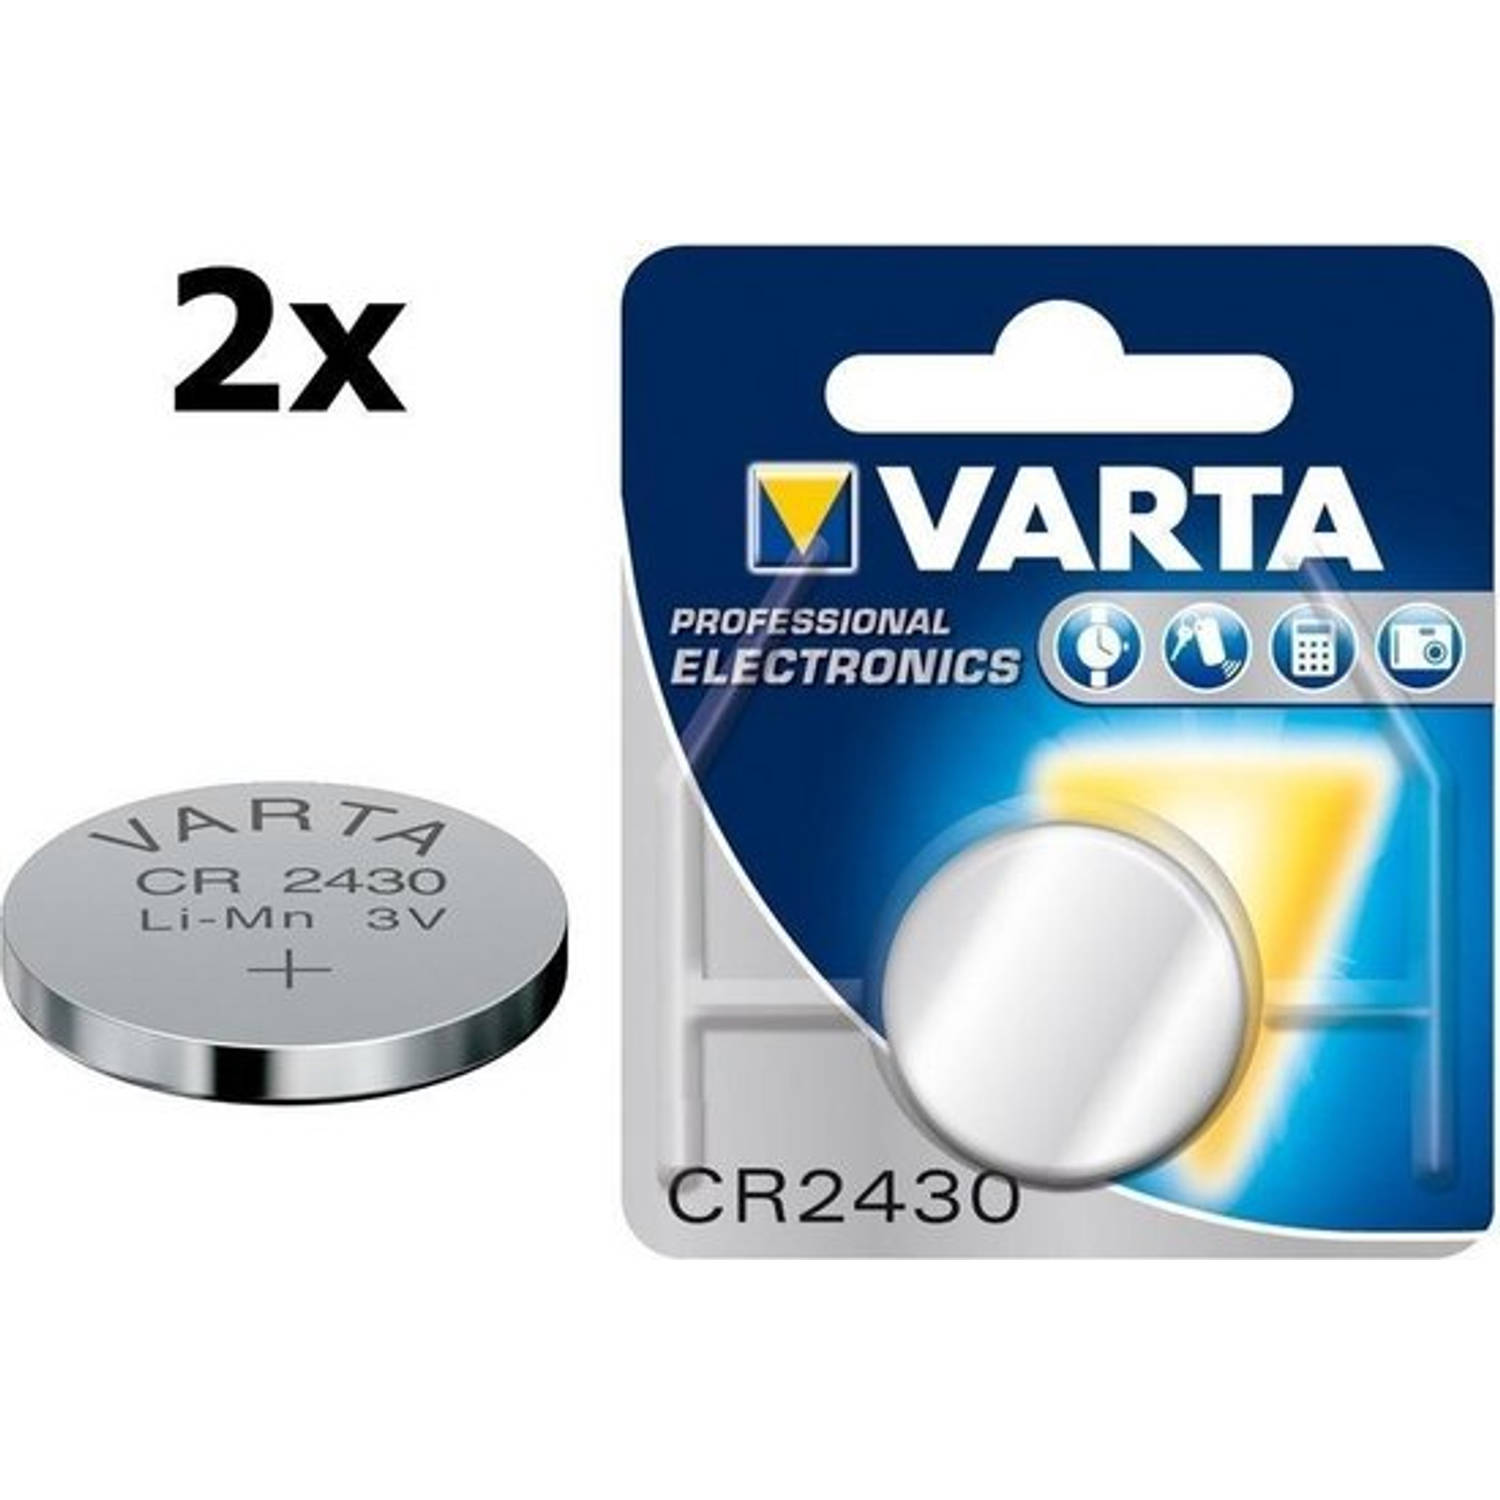 2 Stuks Varta Cr2430 280mah 3v Professional Electronics Lithium Knoopcel Batterij